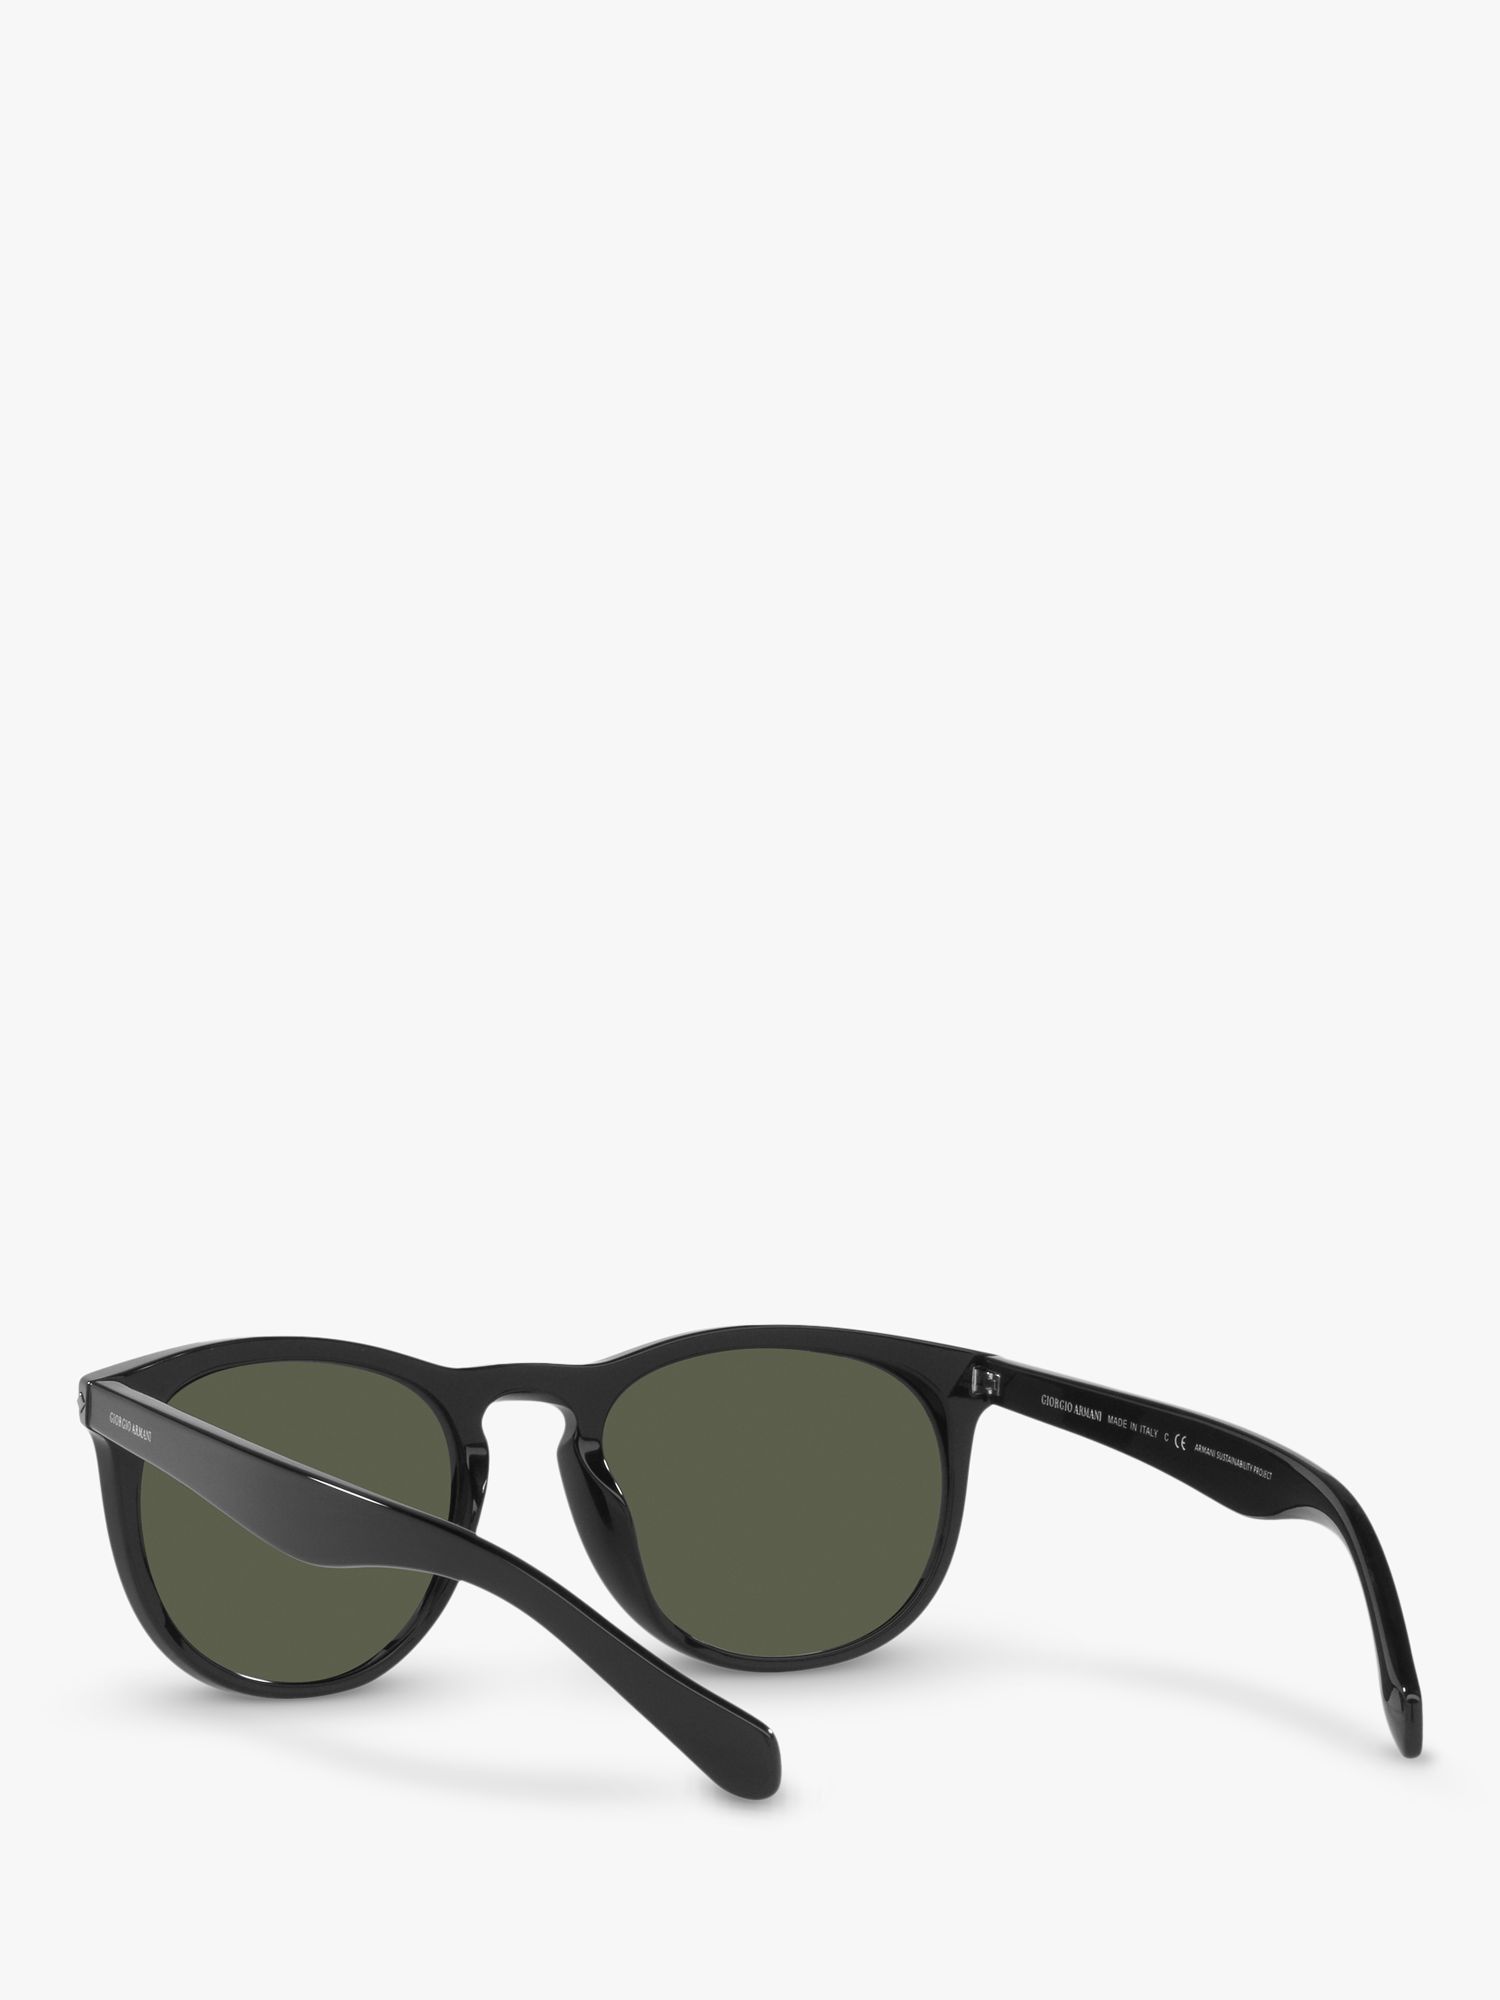 Buy Emporio Armani AR814958 Men's Pillow Sunglasses, Black/Green Online at johnlewis.com